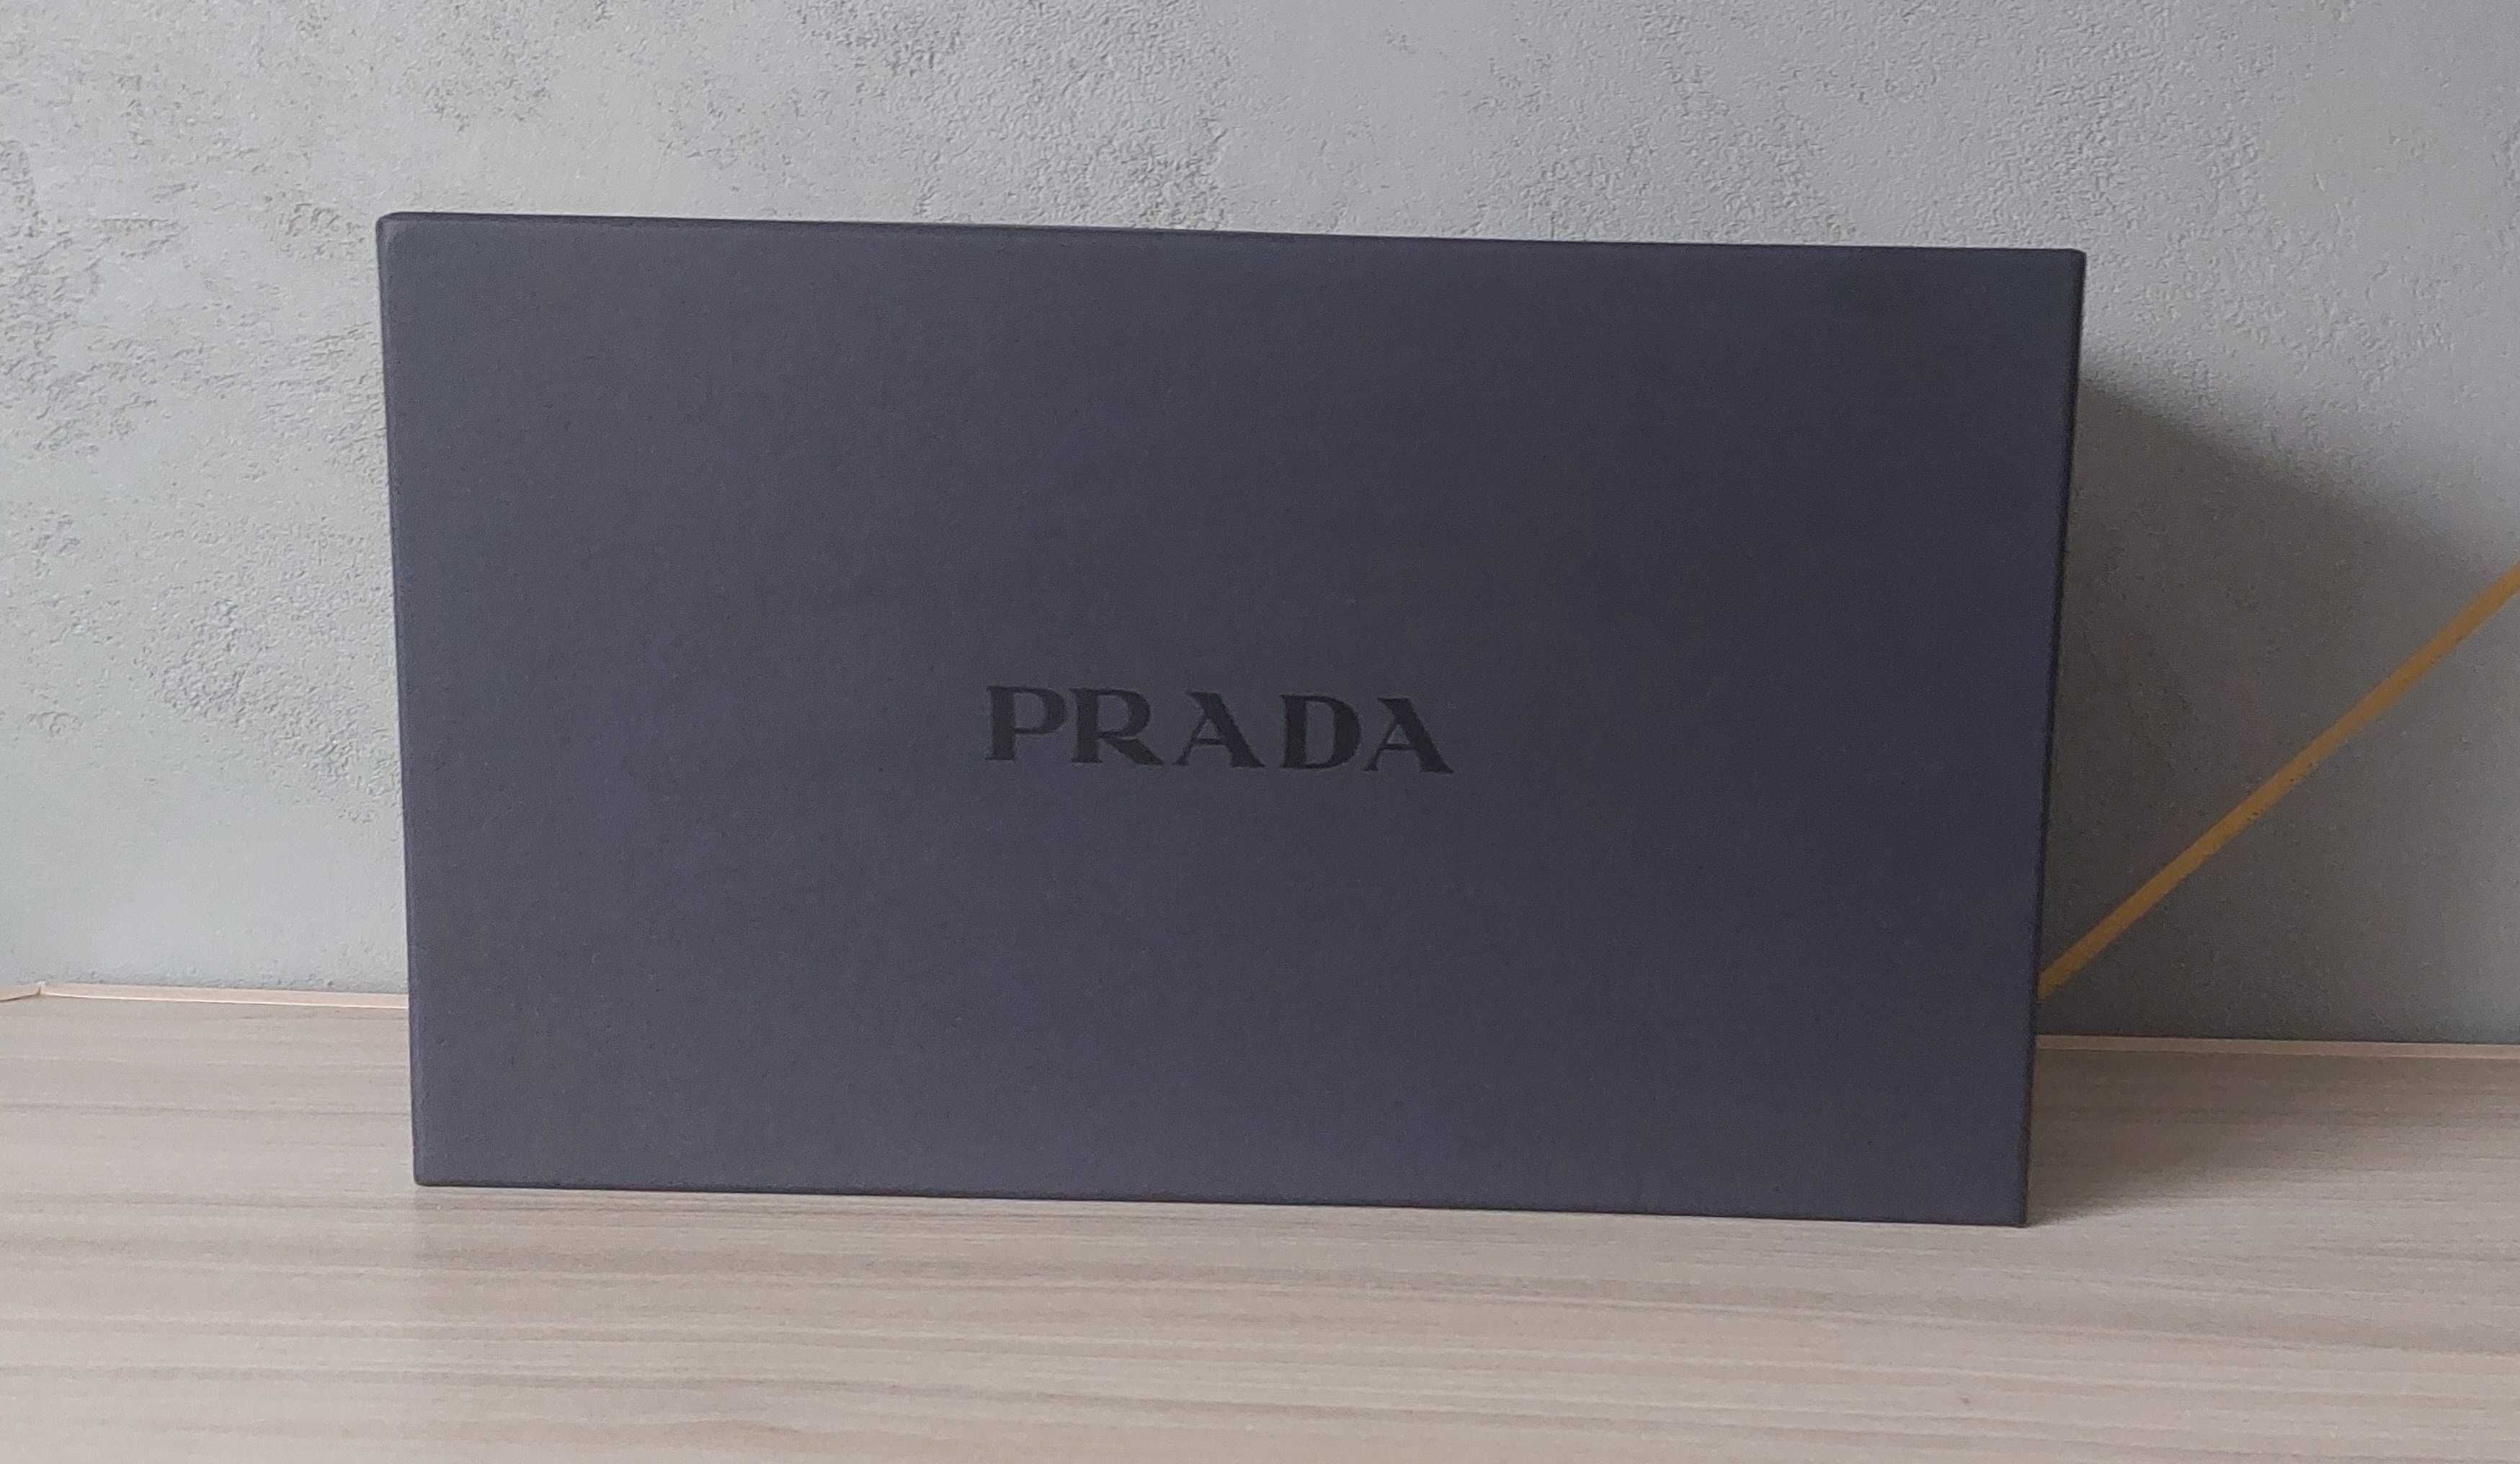 Pudełko PRADA - 34x20x13 cm - oryginalne, idealne na prezent